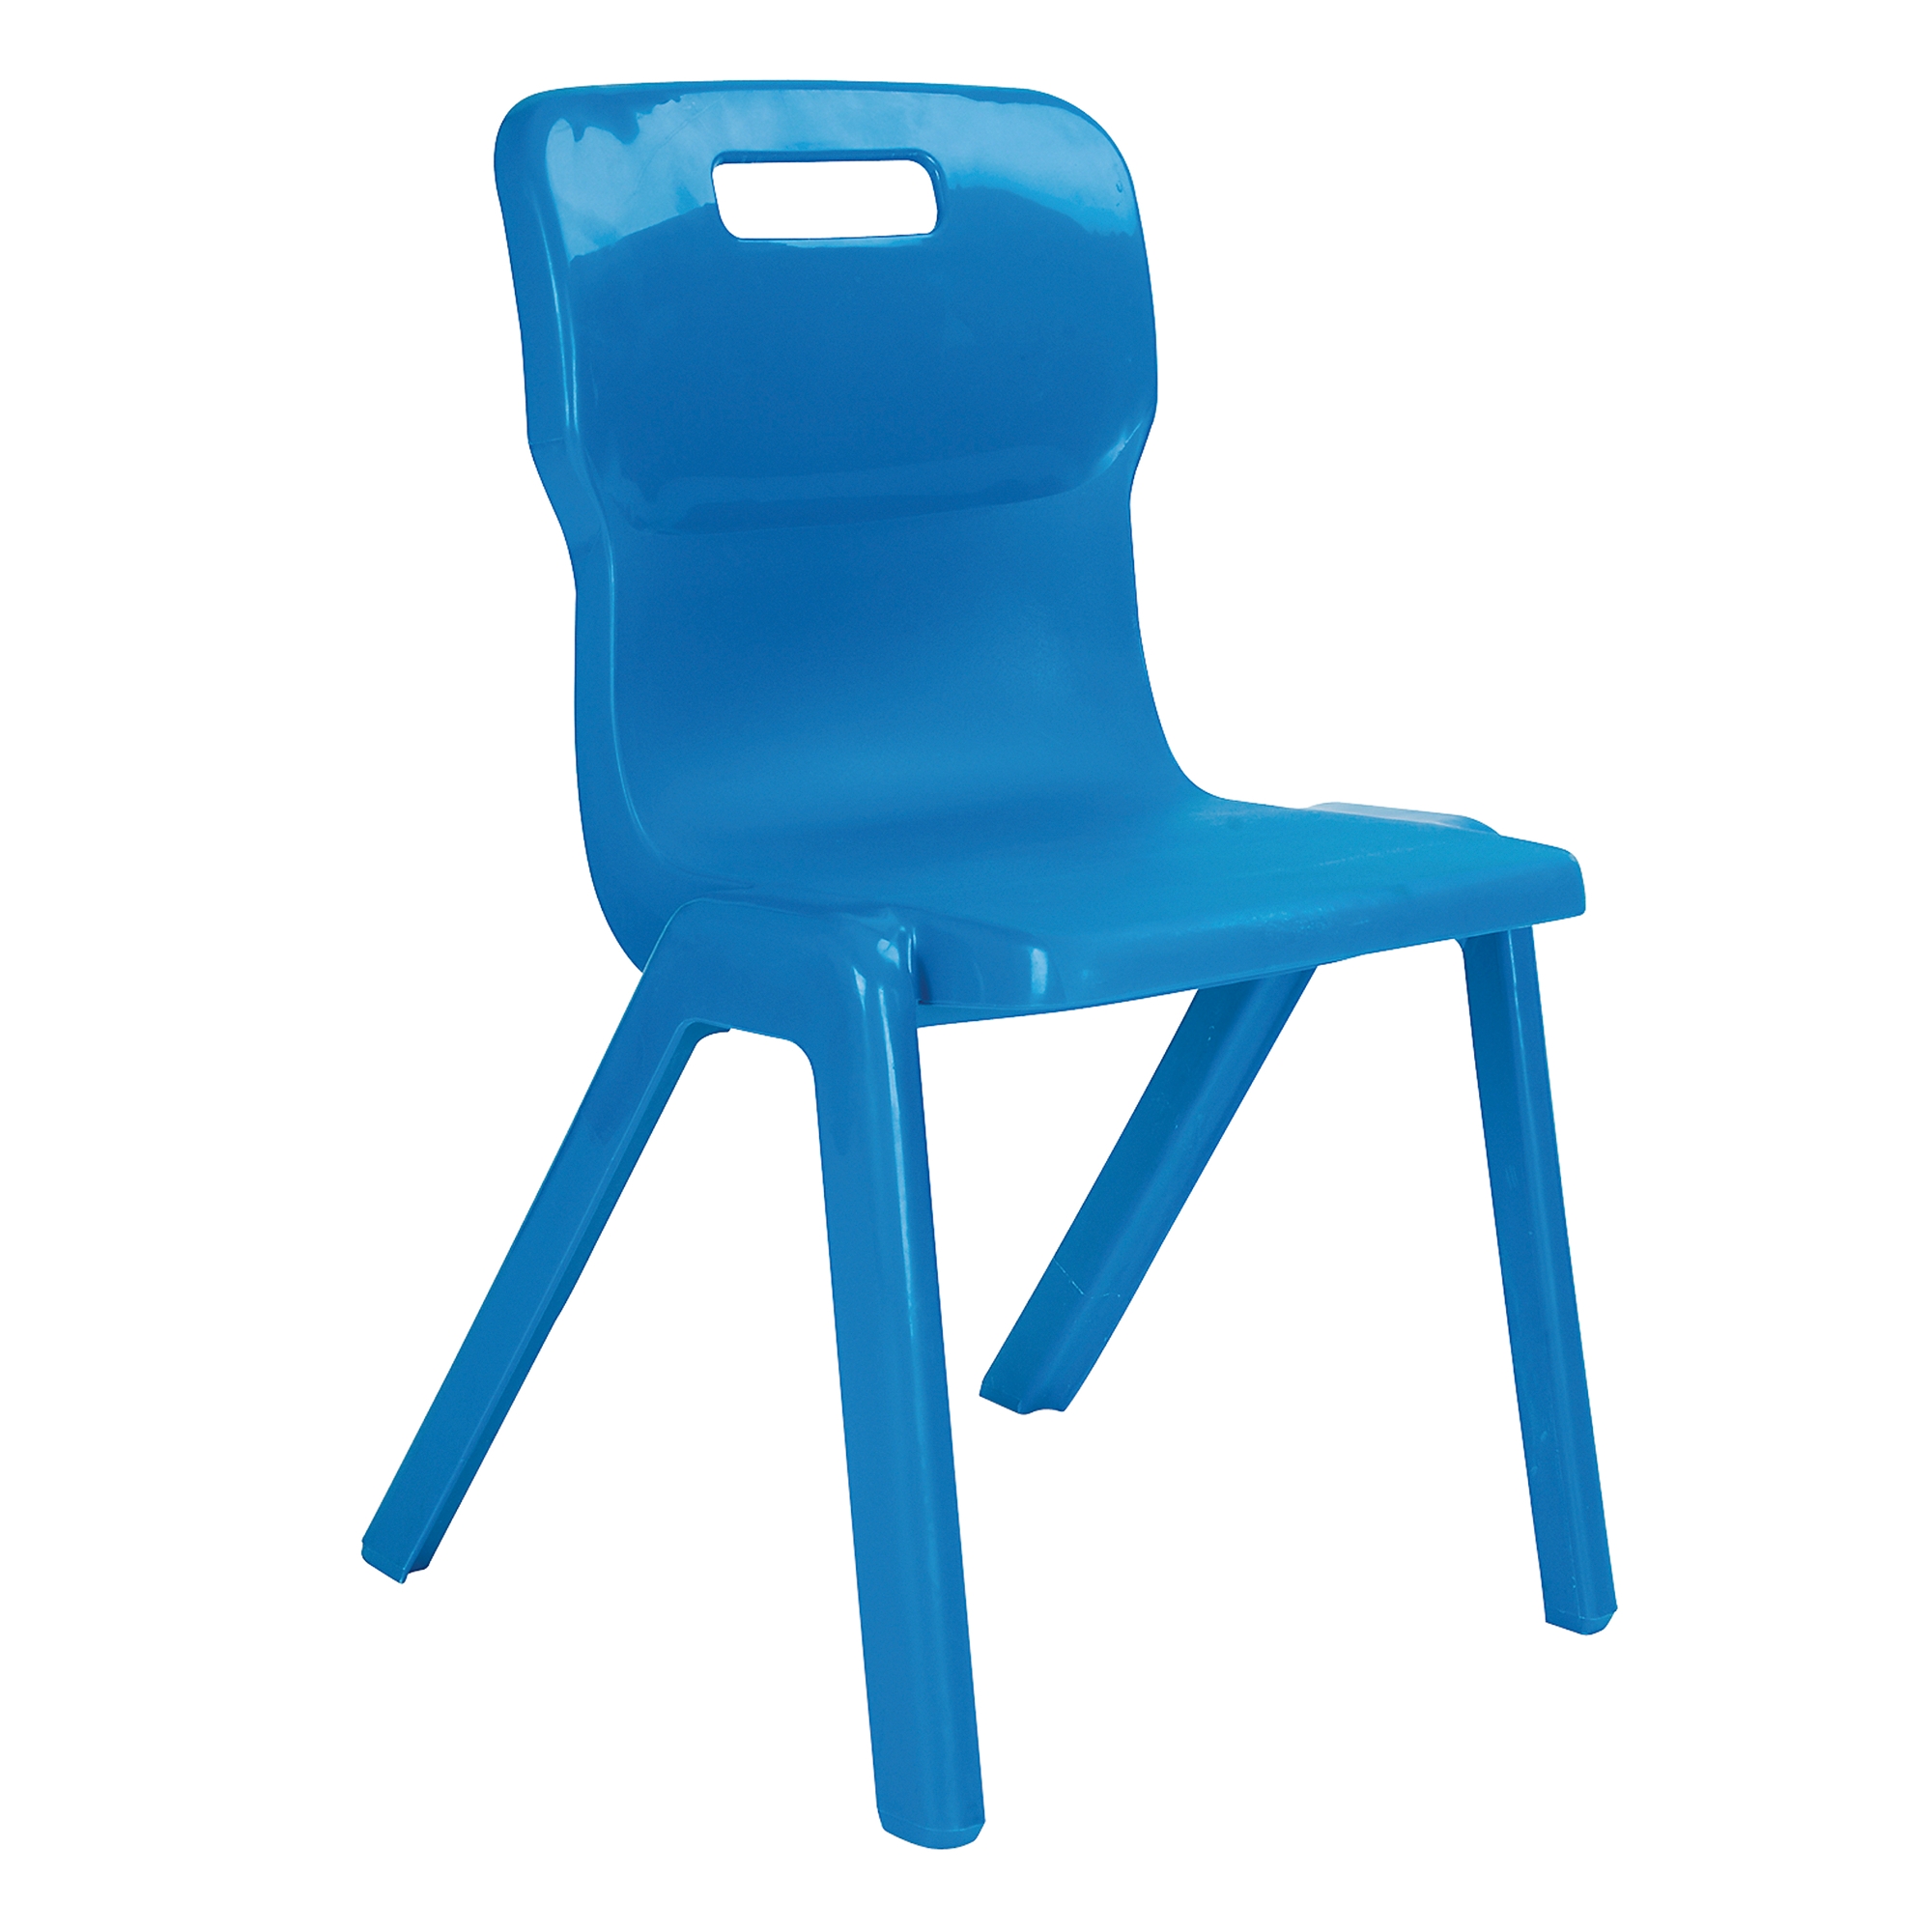 One Piece Titan Chair - Size 3 Ages 6-8 Sky Blue